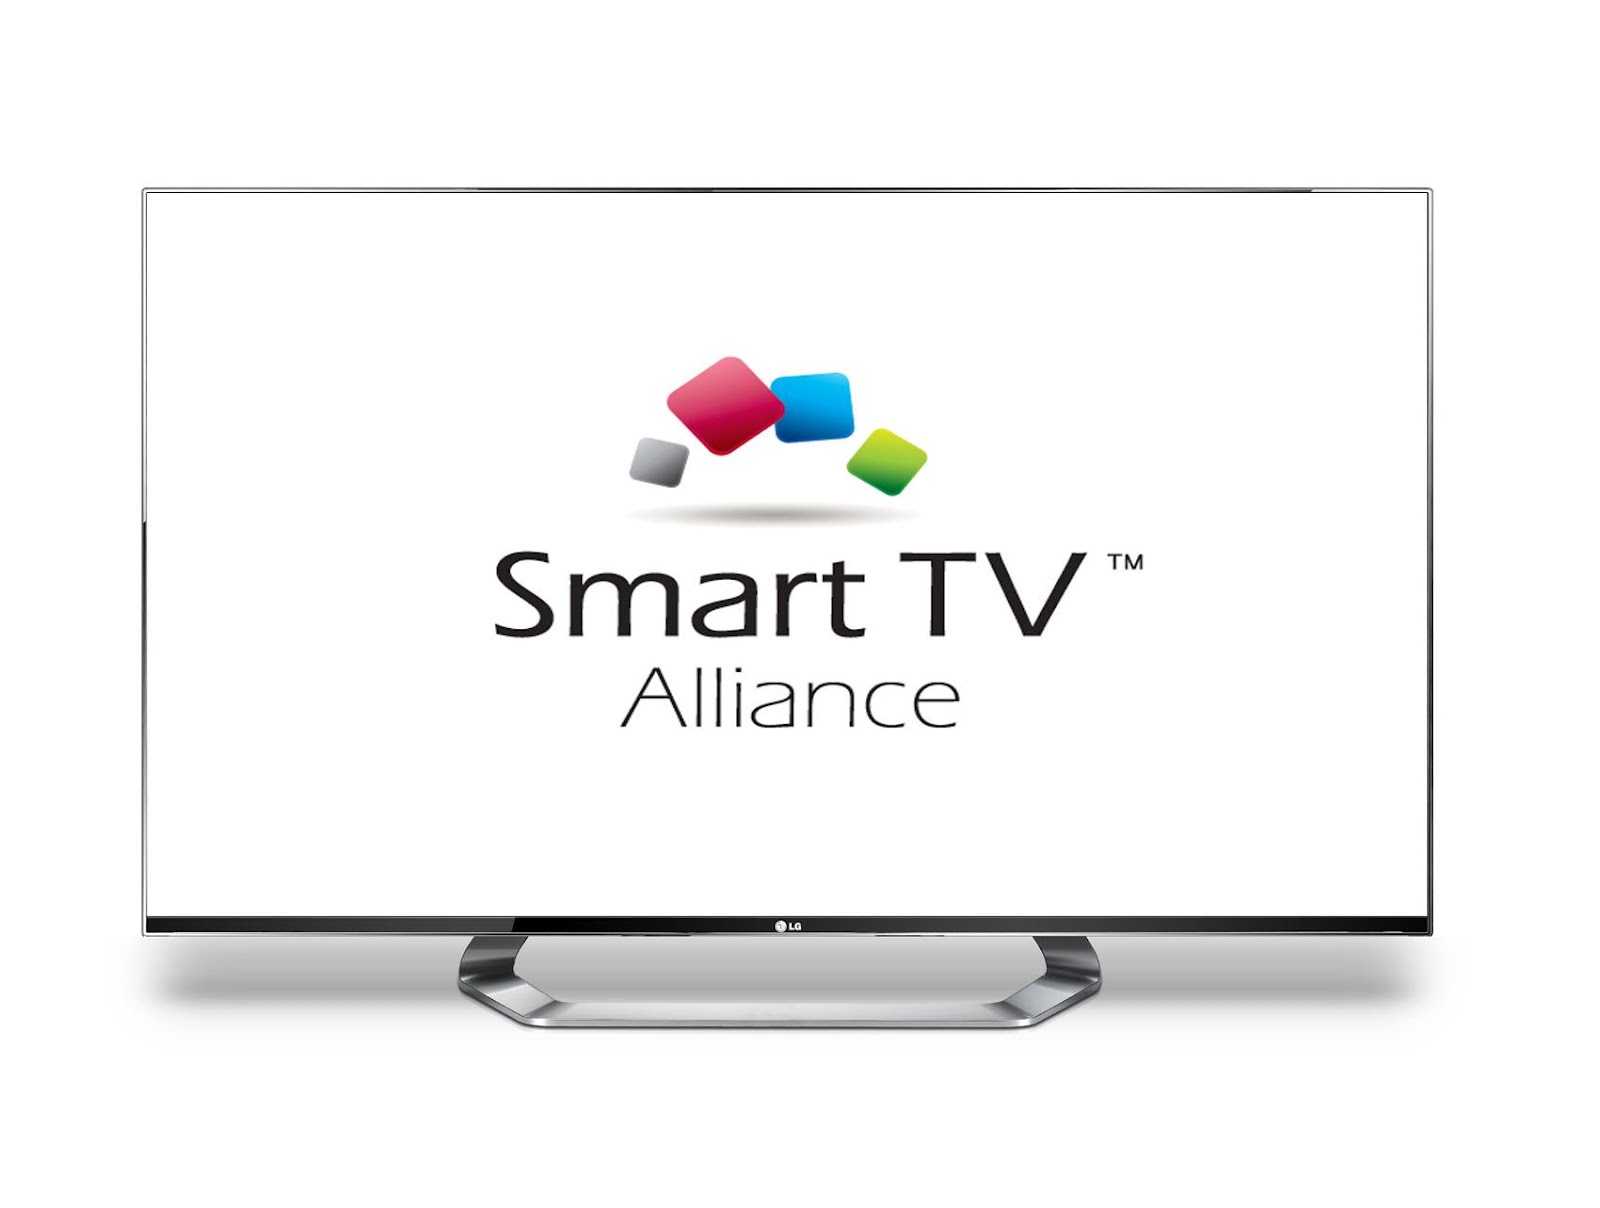 Lg телевизоры логотип. Смарт телевизор. Смарт ТВ логотип. Логотип LG Smart TV. LG телевизоры лого.